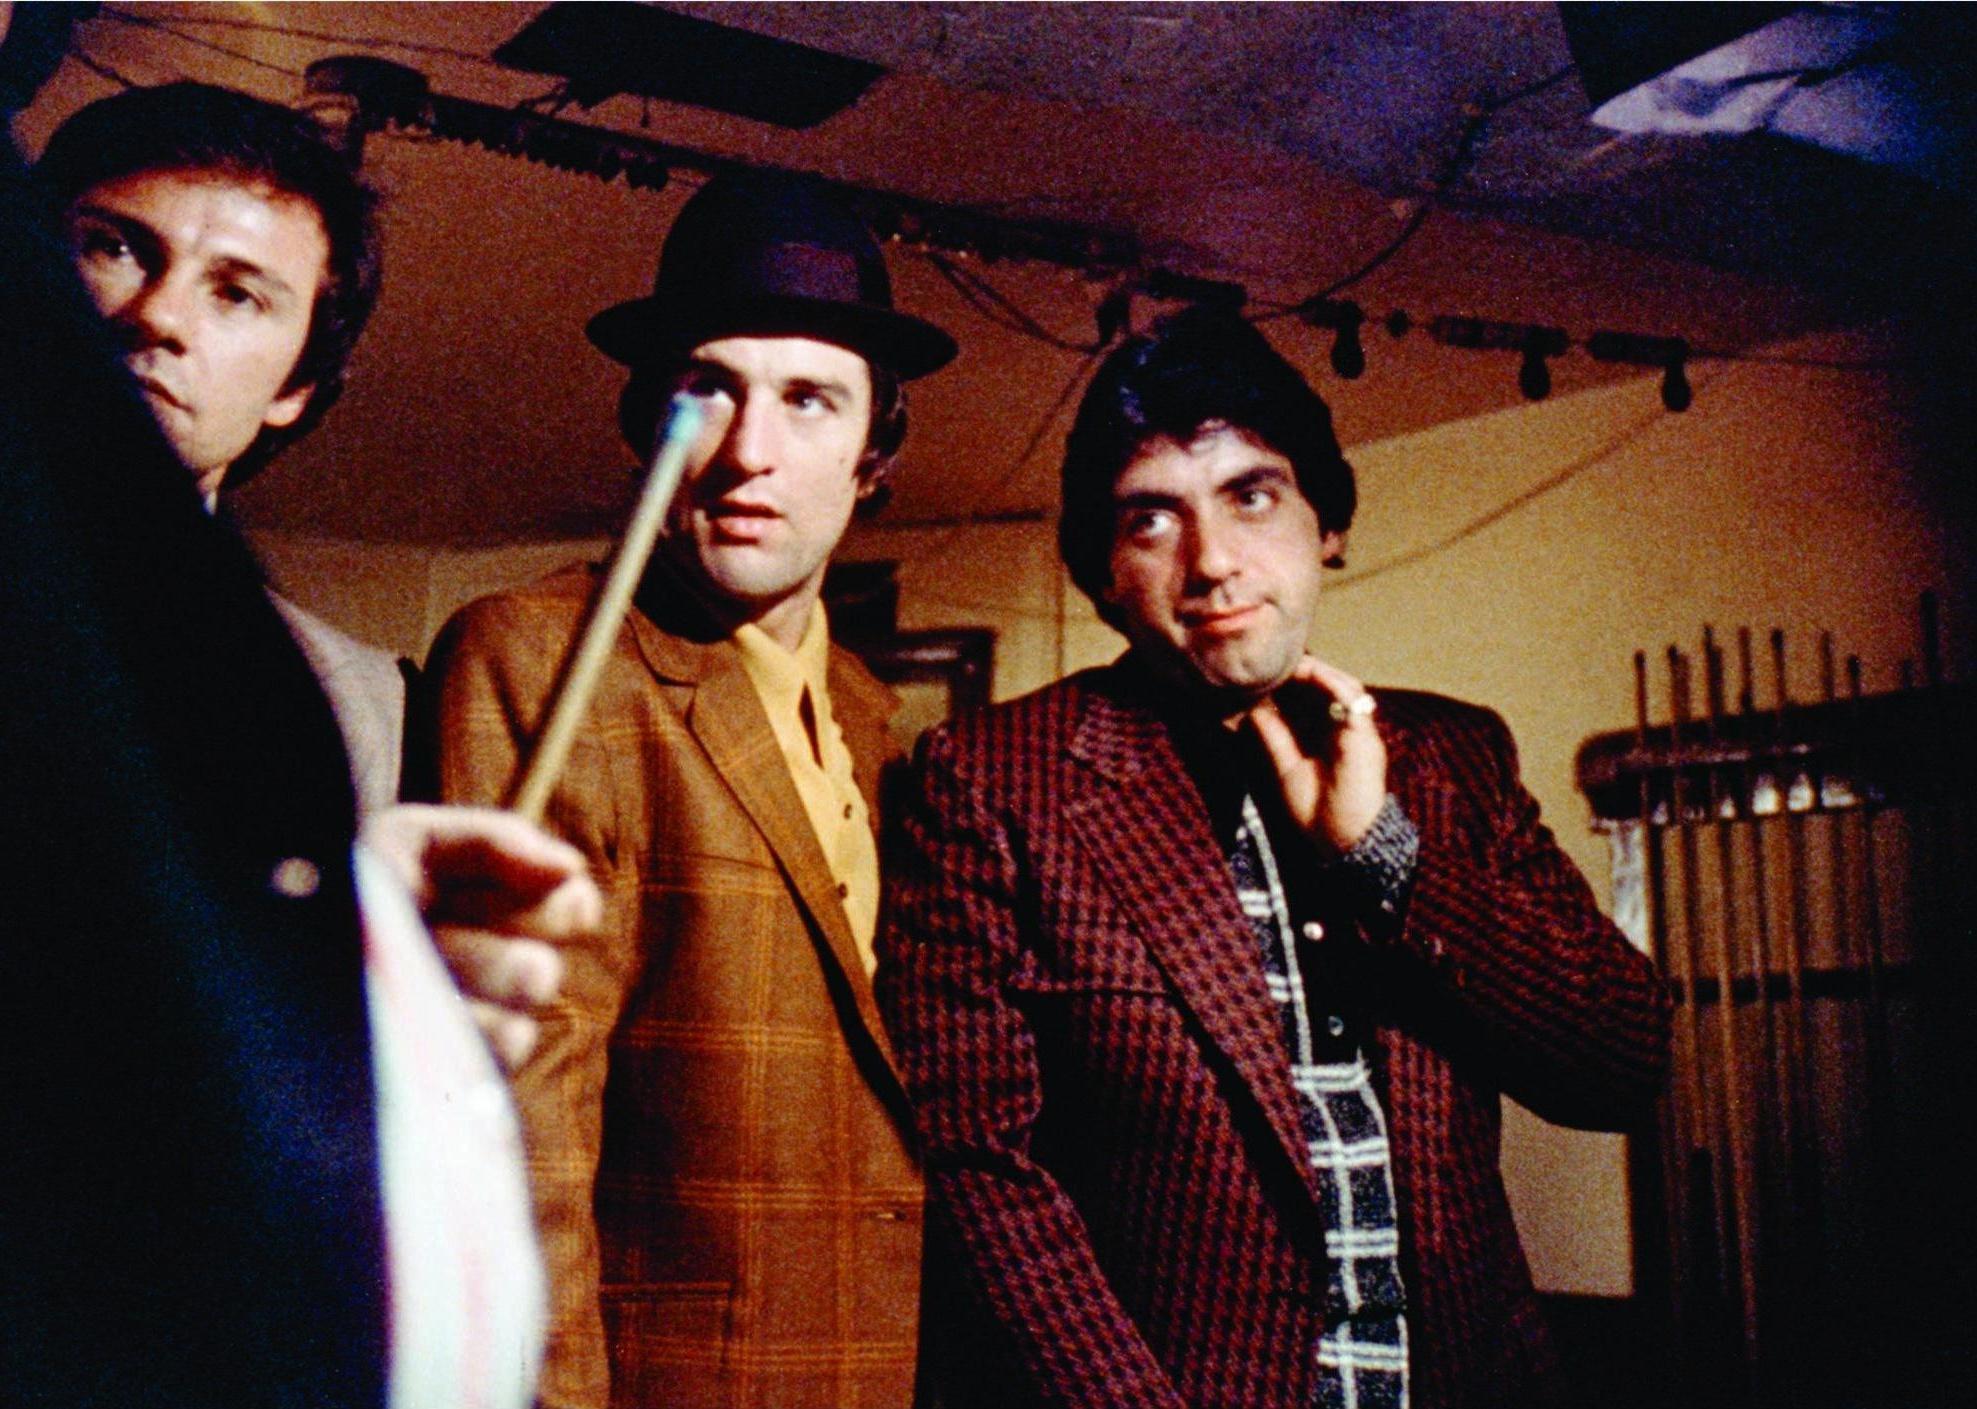 Robert De Niro, Harvey Keitel, and David Proval standing next to a pool table.